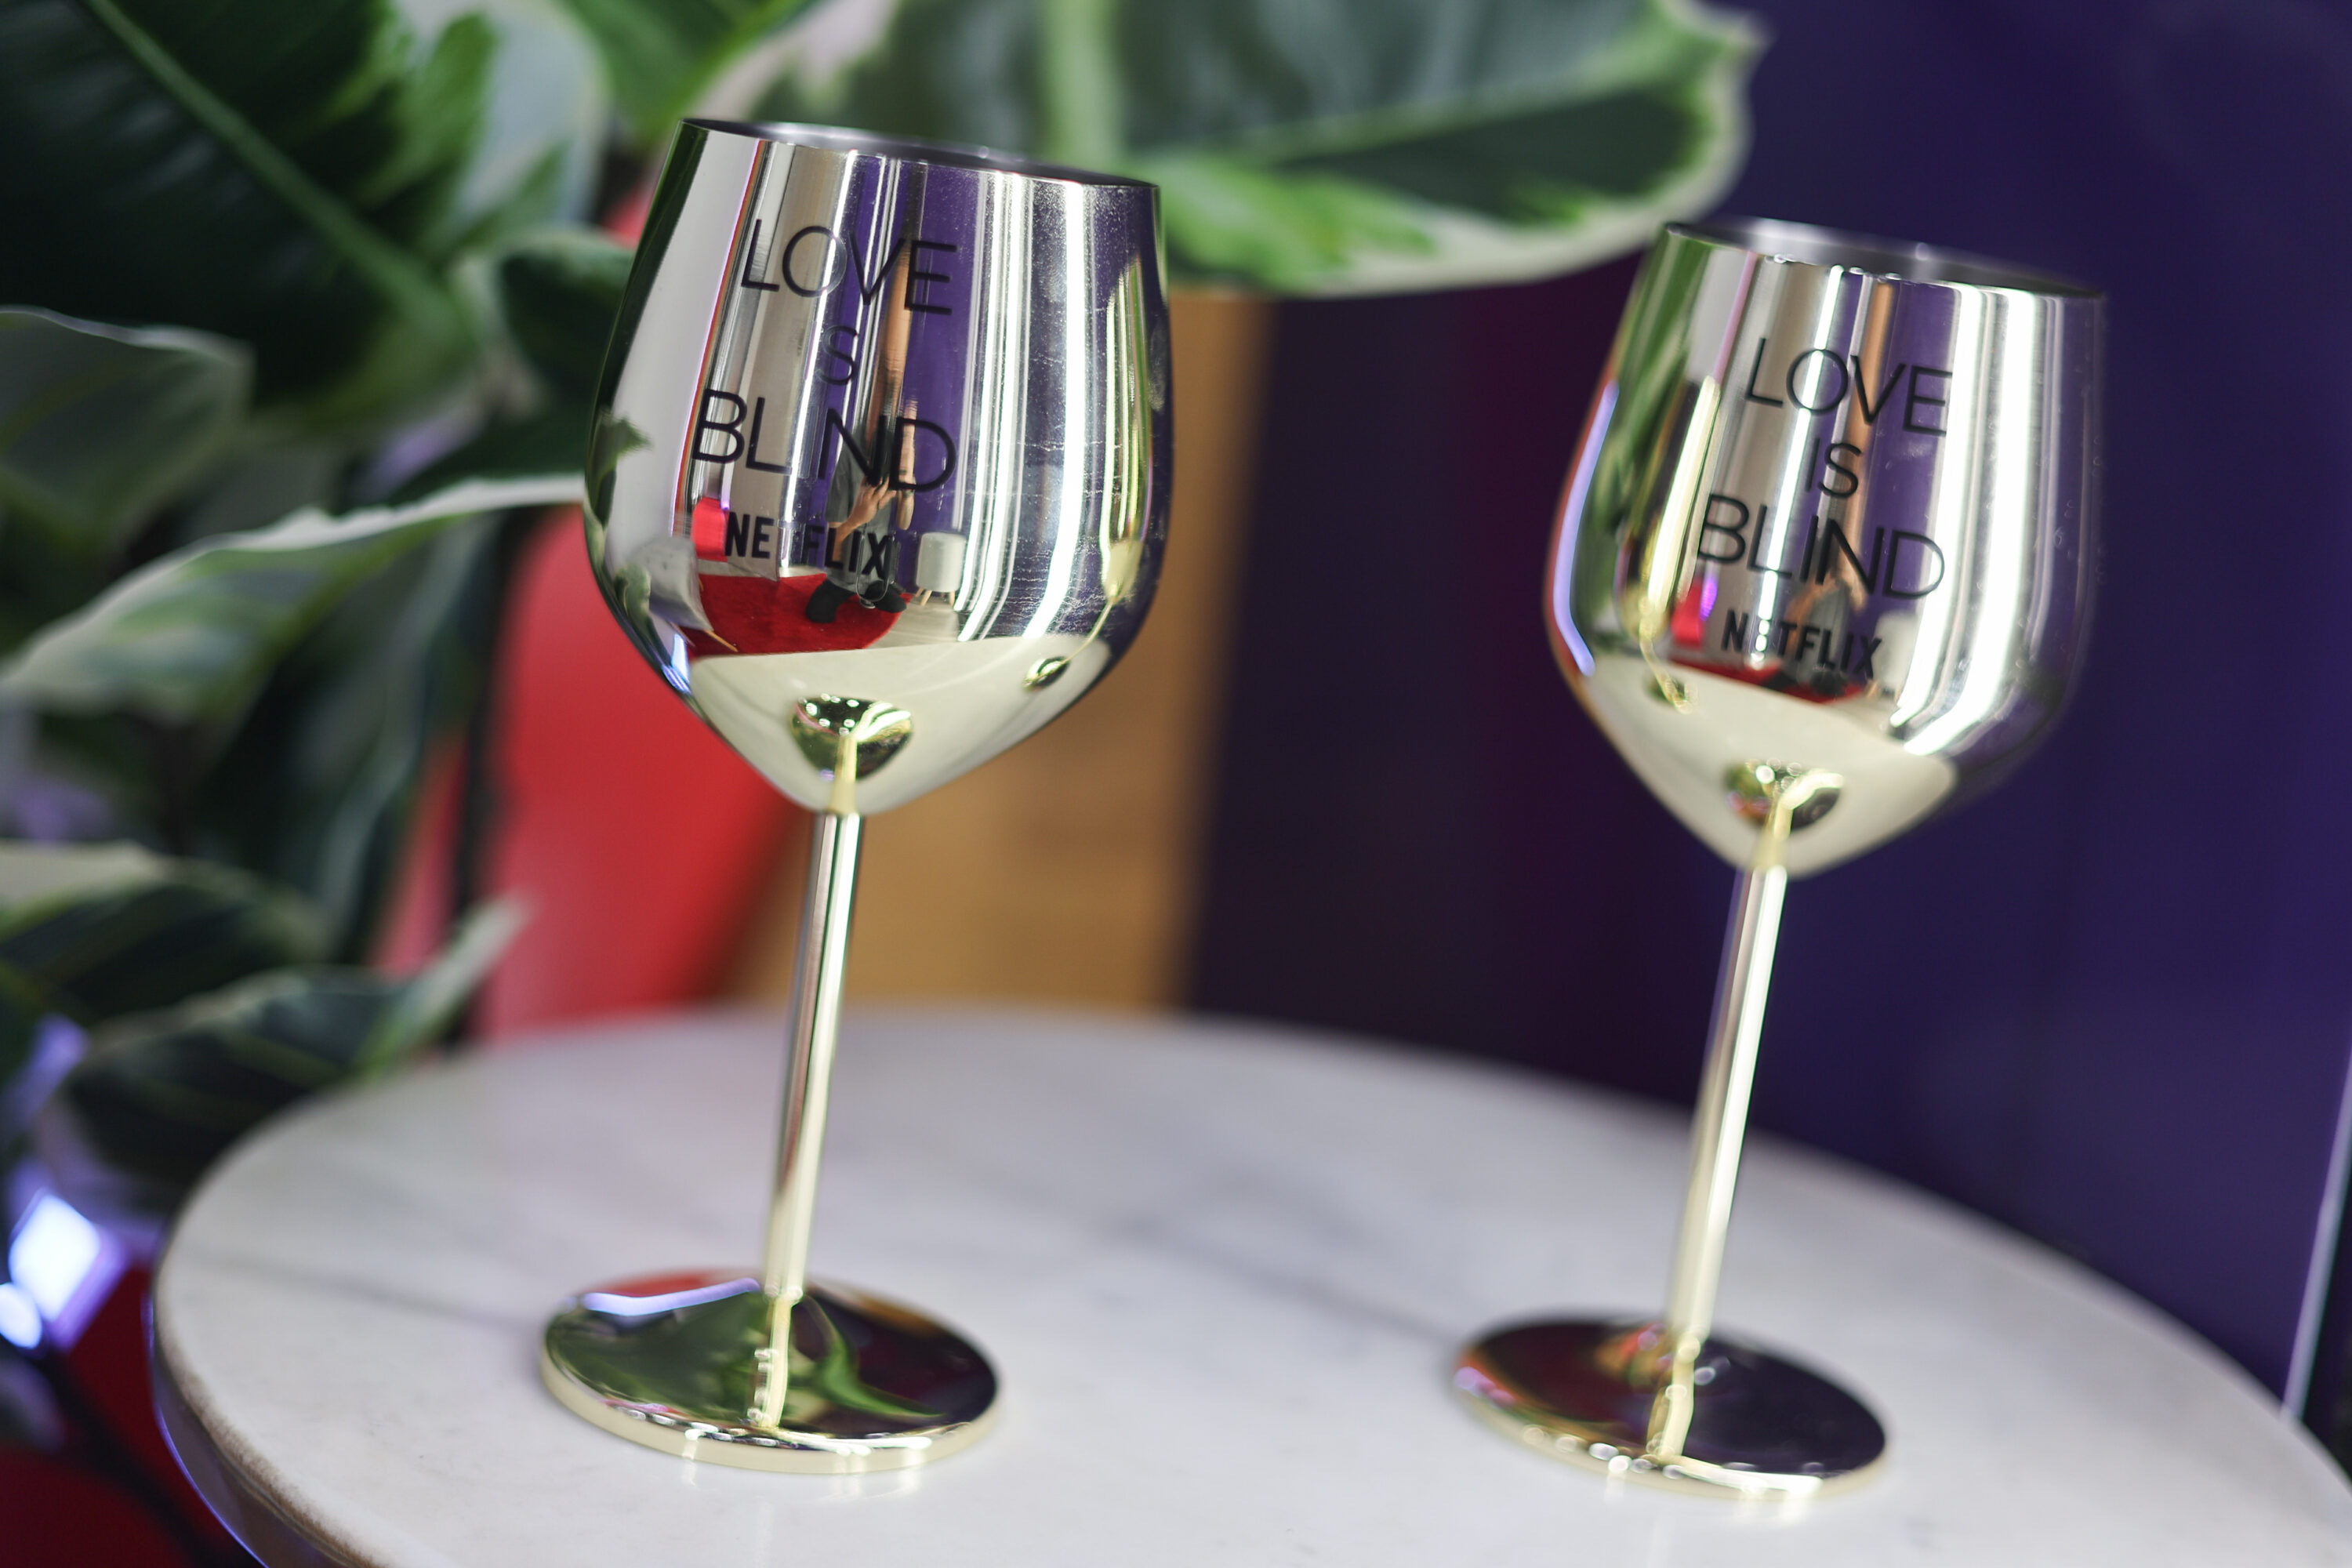 How We Jingle Stemless Wine Glasses ~ Set of 4